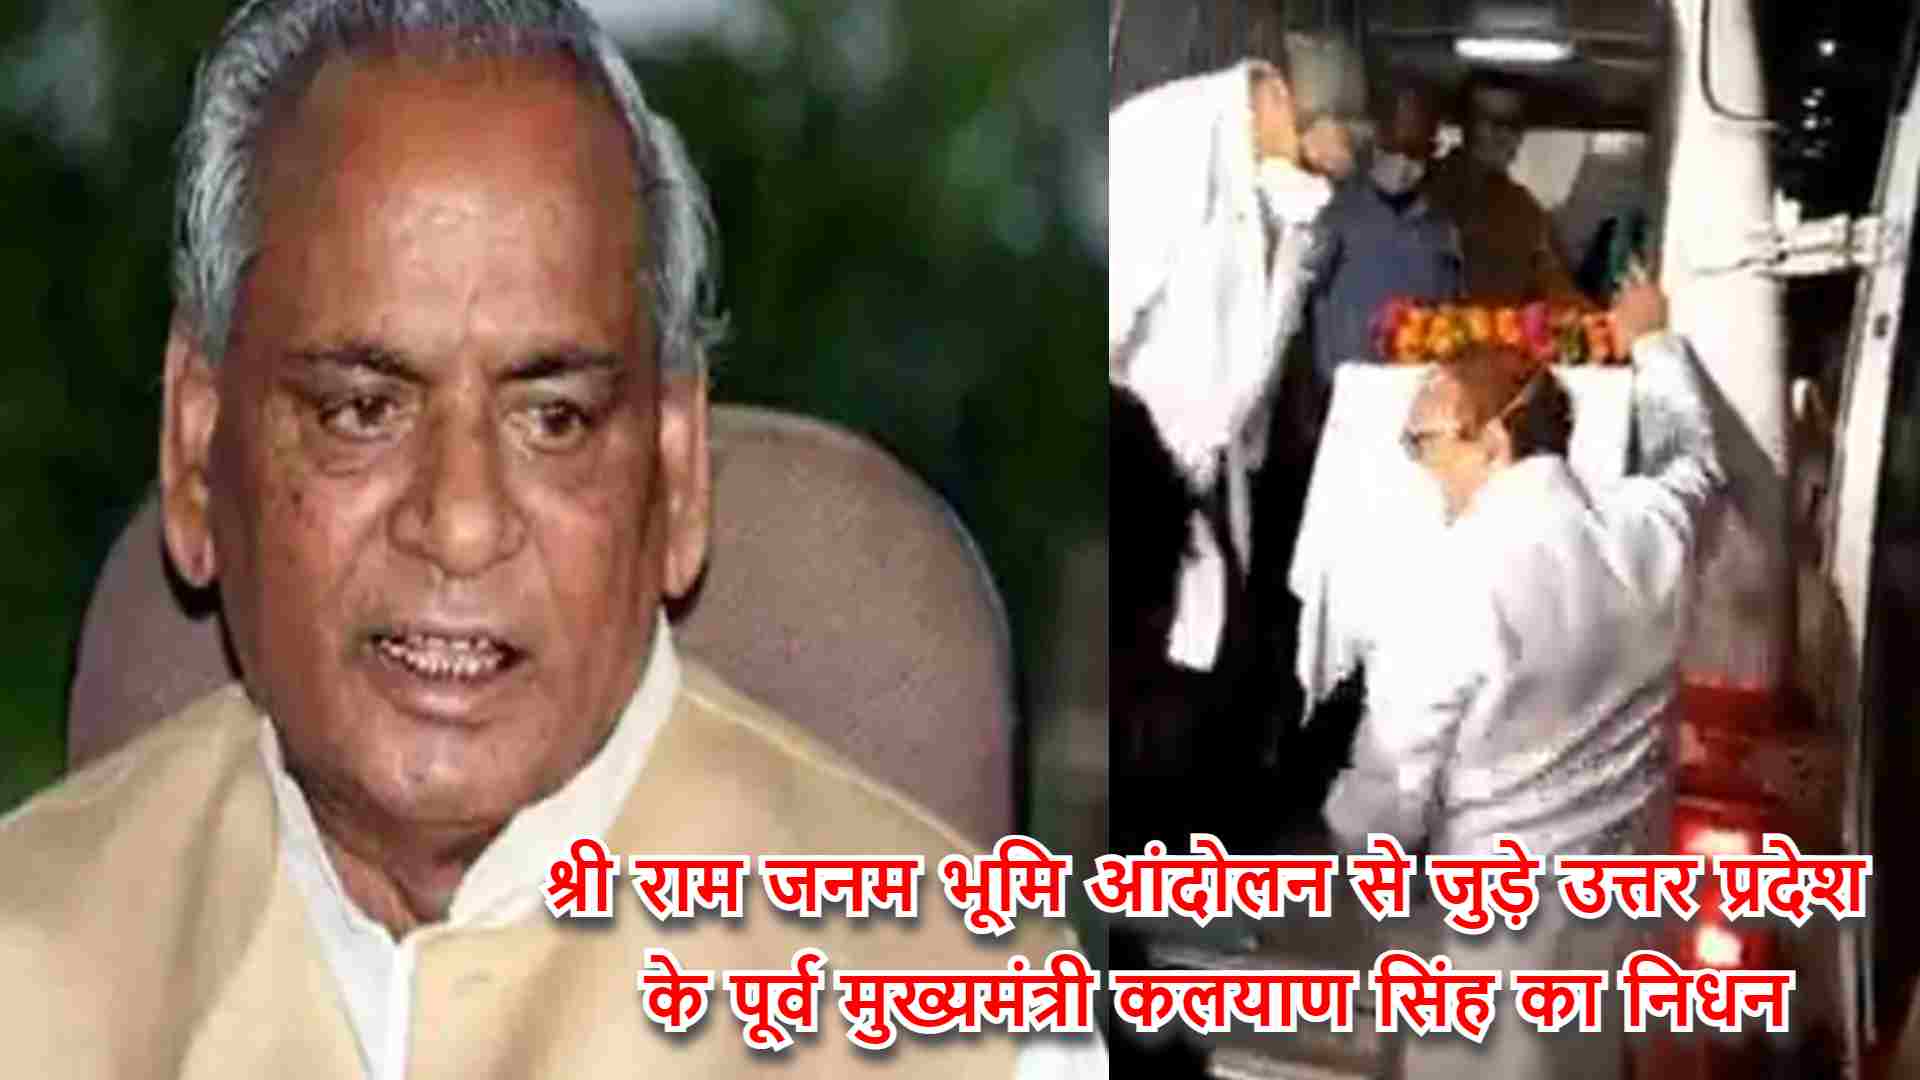 Former Uttar Pradesh Chief Minister Kalyan Singh associated with Shri Ram Janam Bhoomi movement passed away